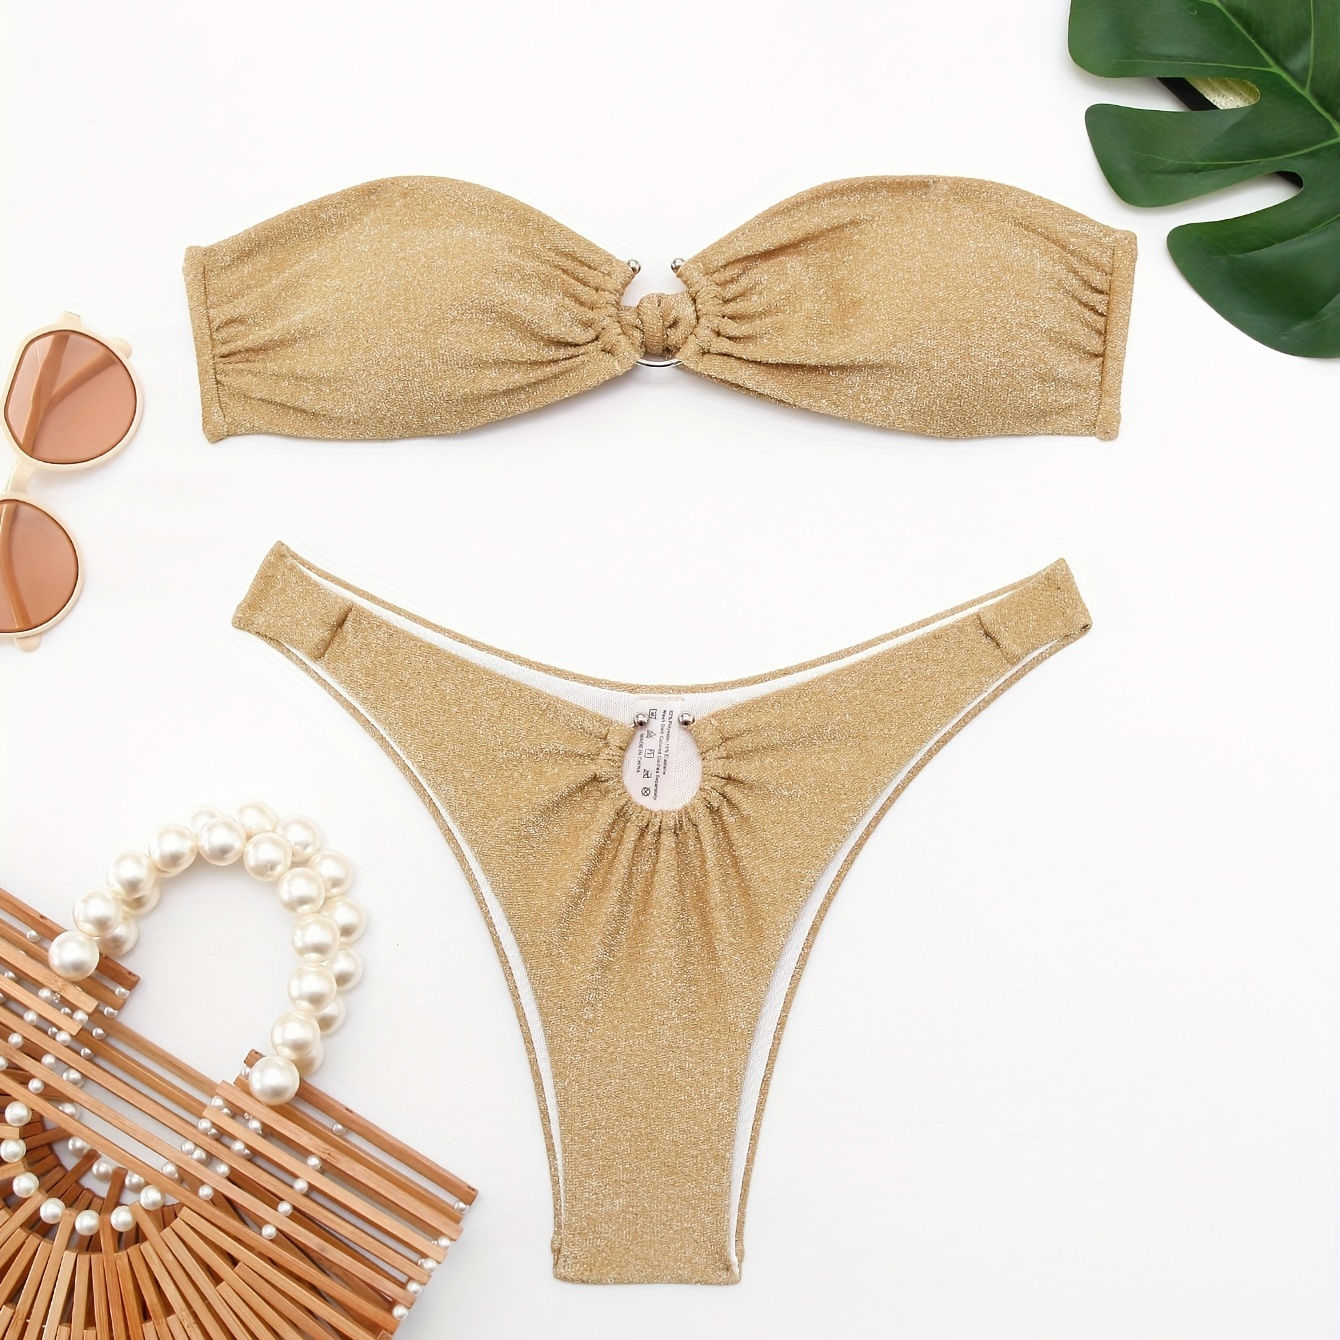 

Women's Bikini Set, 2-piece Swimsuit, Ring-linked Detail, Stretchable Summer Swimwear, Beachwear With Bandeau Top & High Cut Bottom